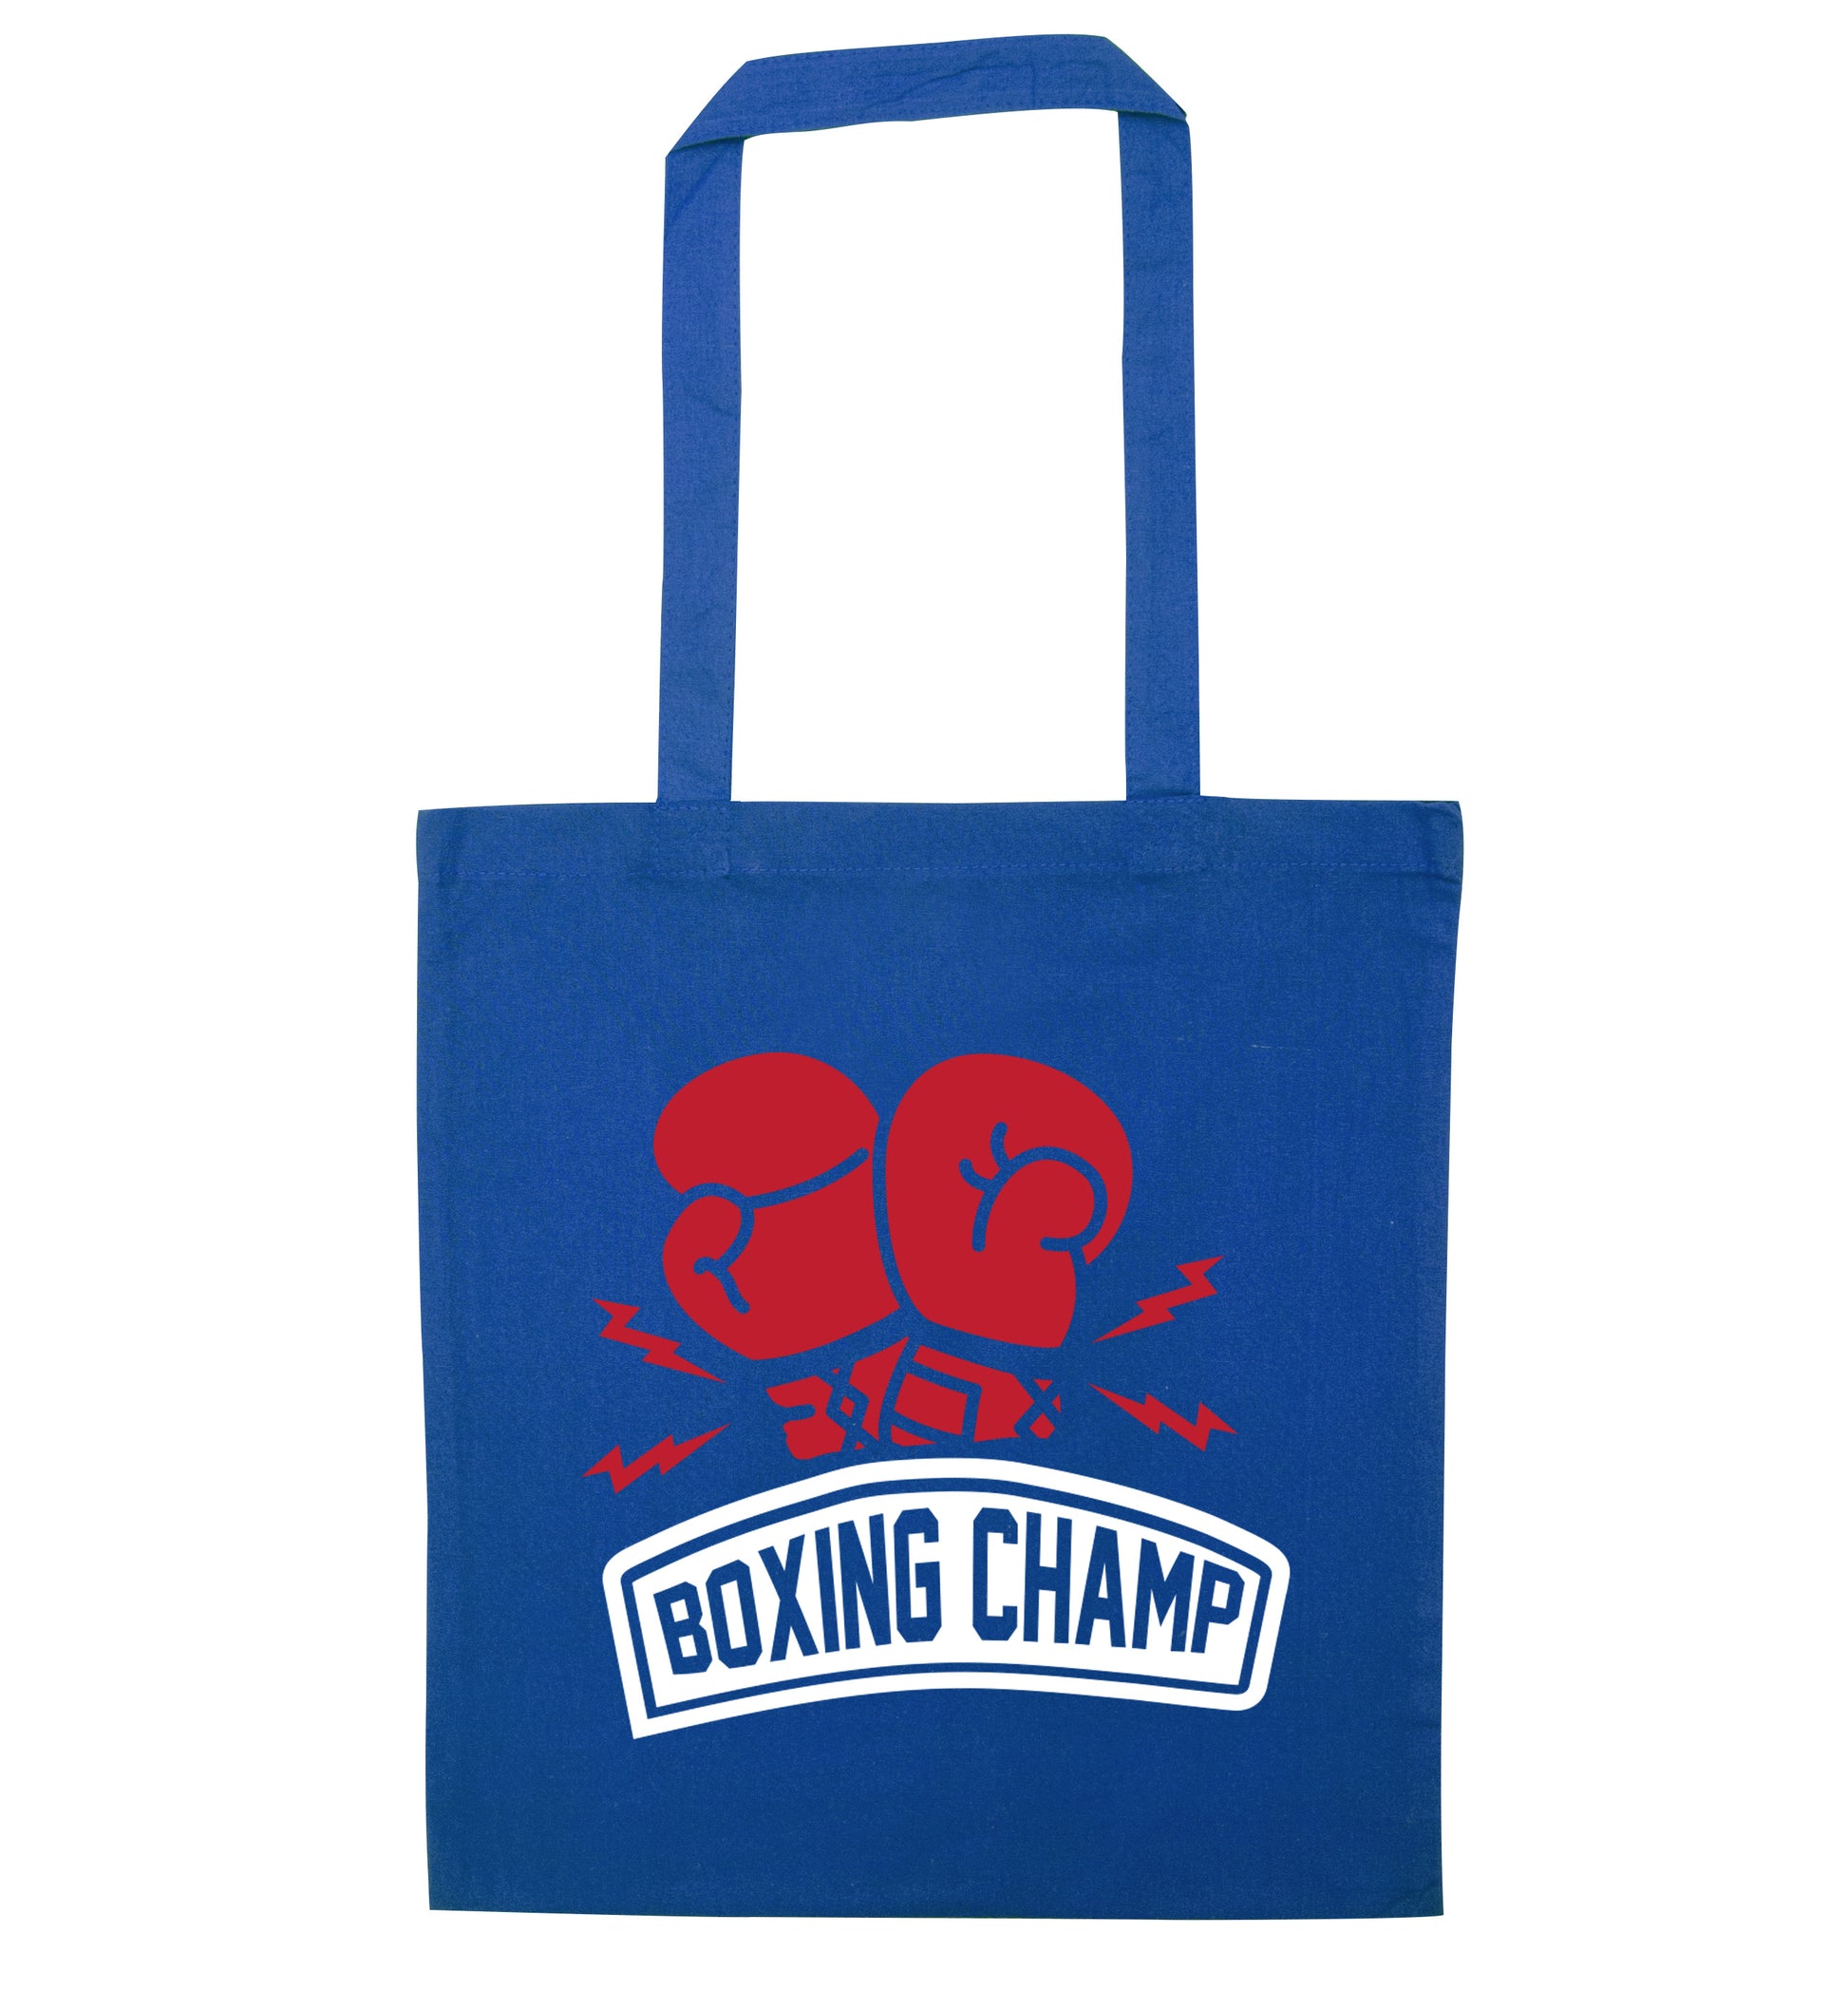 Boxing Champ blue tote bag